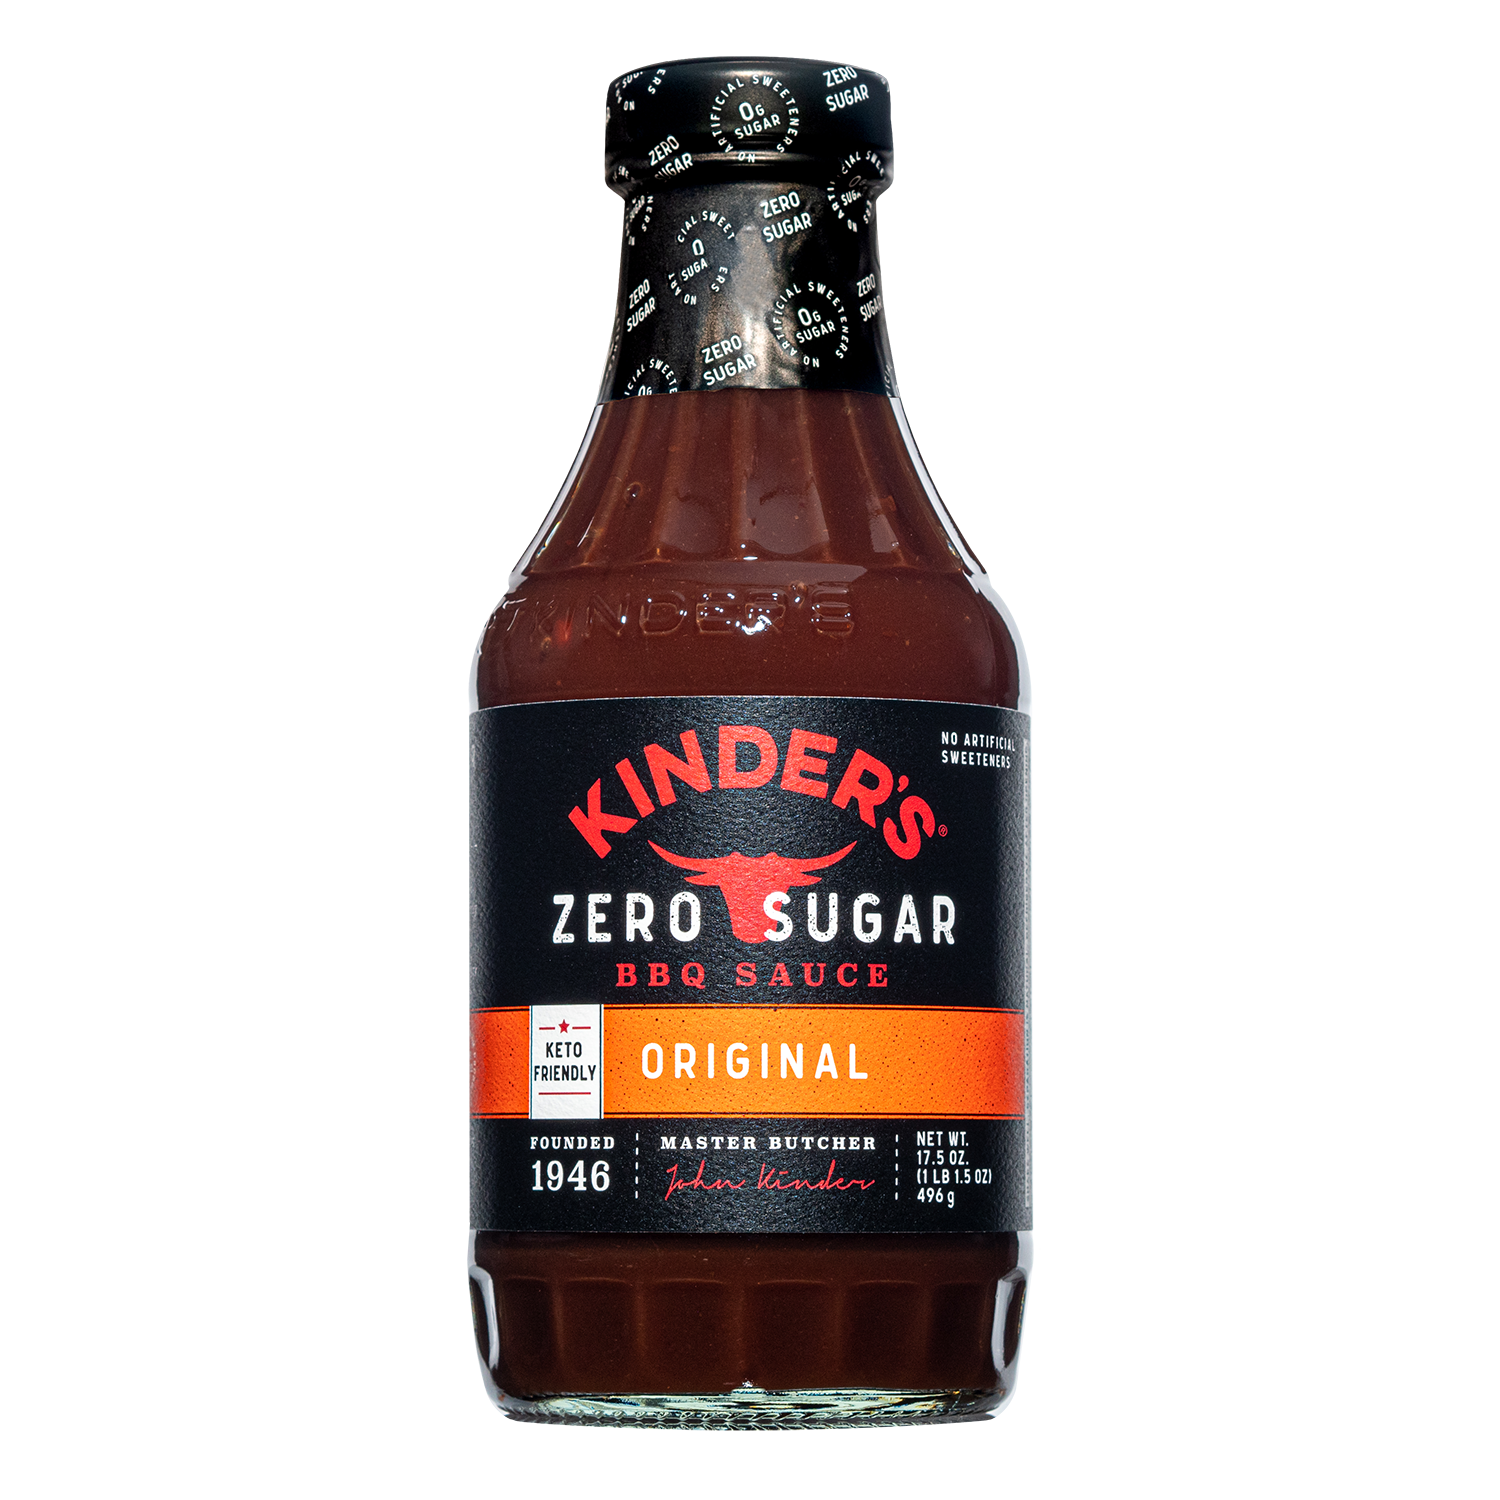 Zero Sugar Original BBQ Sauce
– Kinder's BBQ